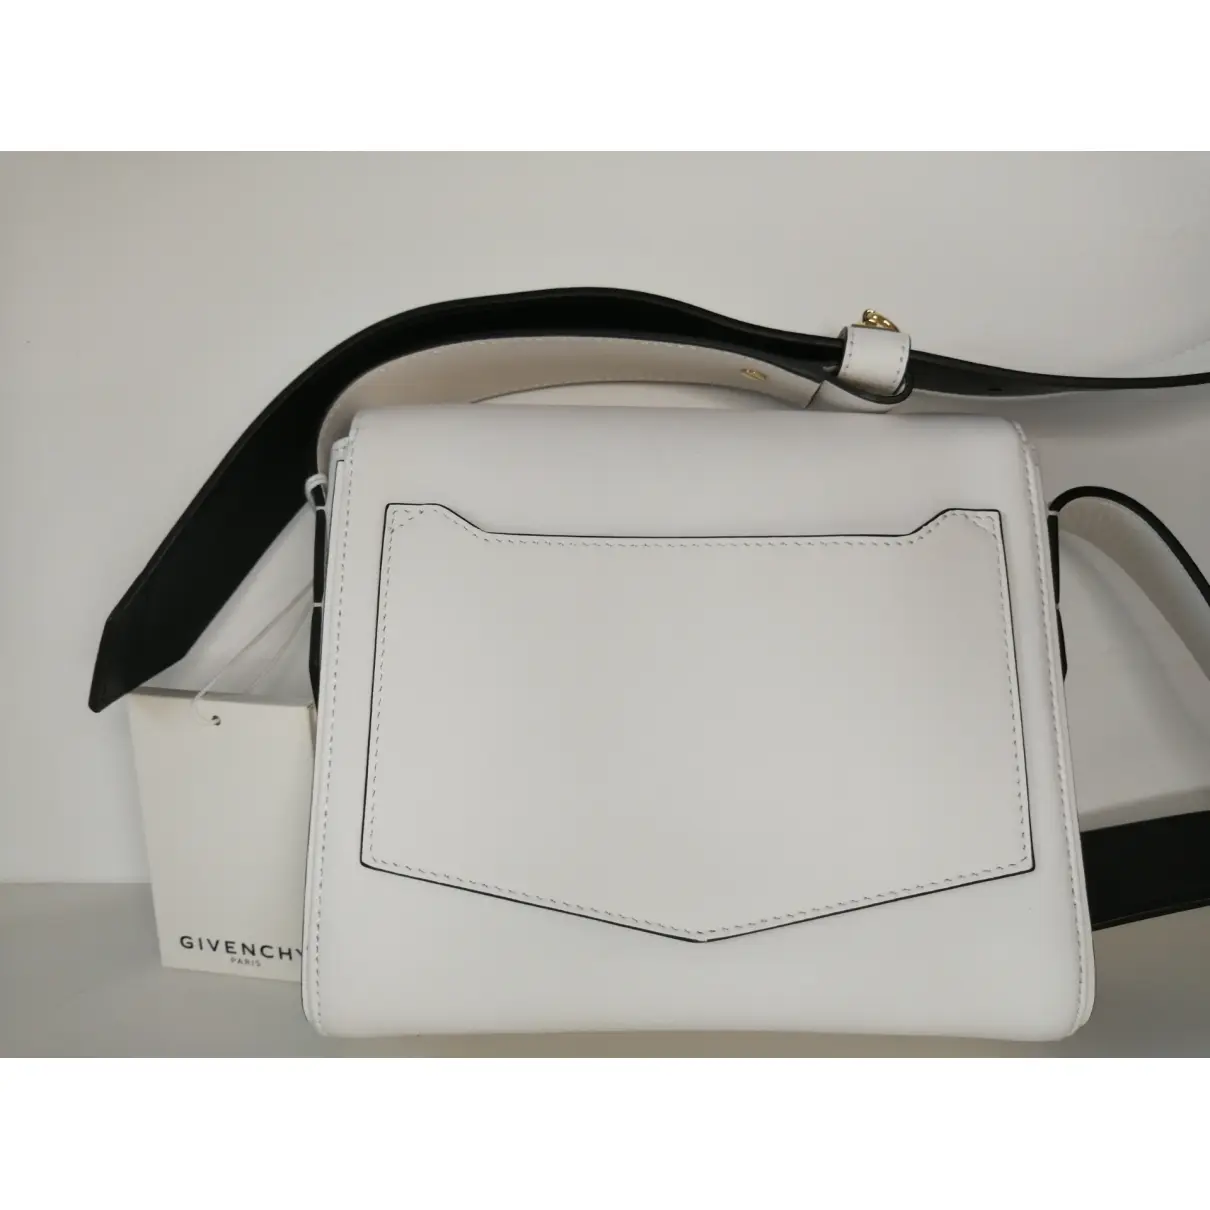 Buy Givenchy Eden leather crossbody bag online